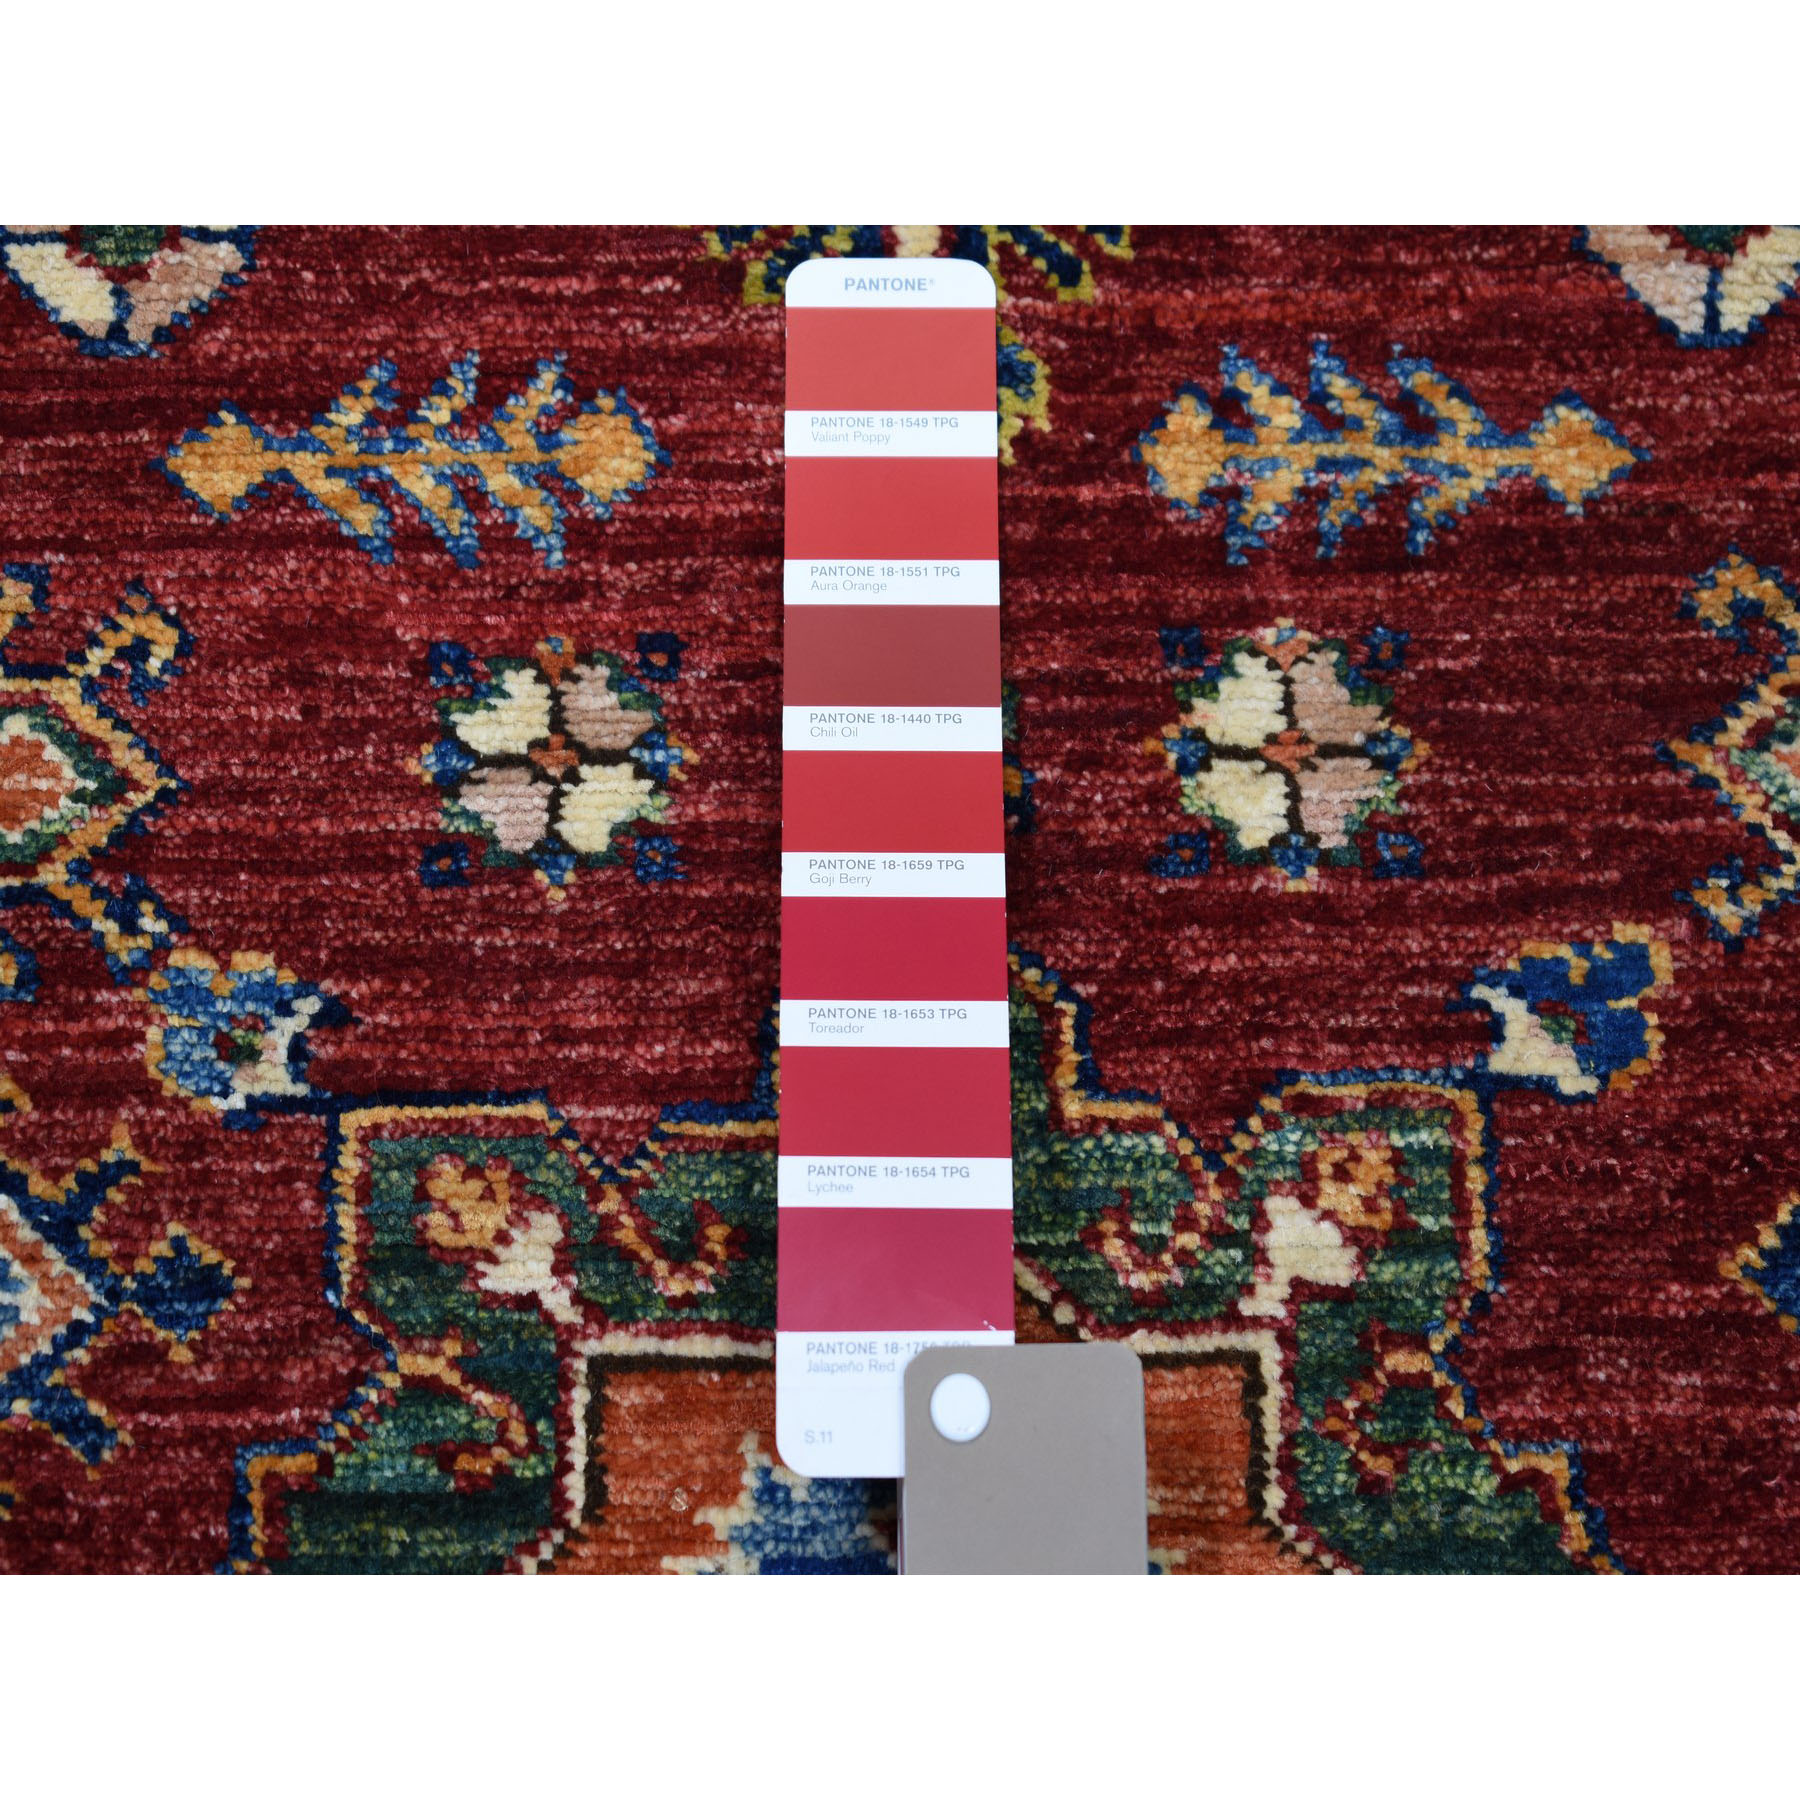 3-4 x19- Red Super Kazak Geometric Design Pure Wool XL Runner Hand-Knotted Oriental Rug 